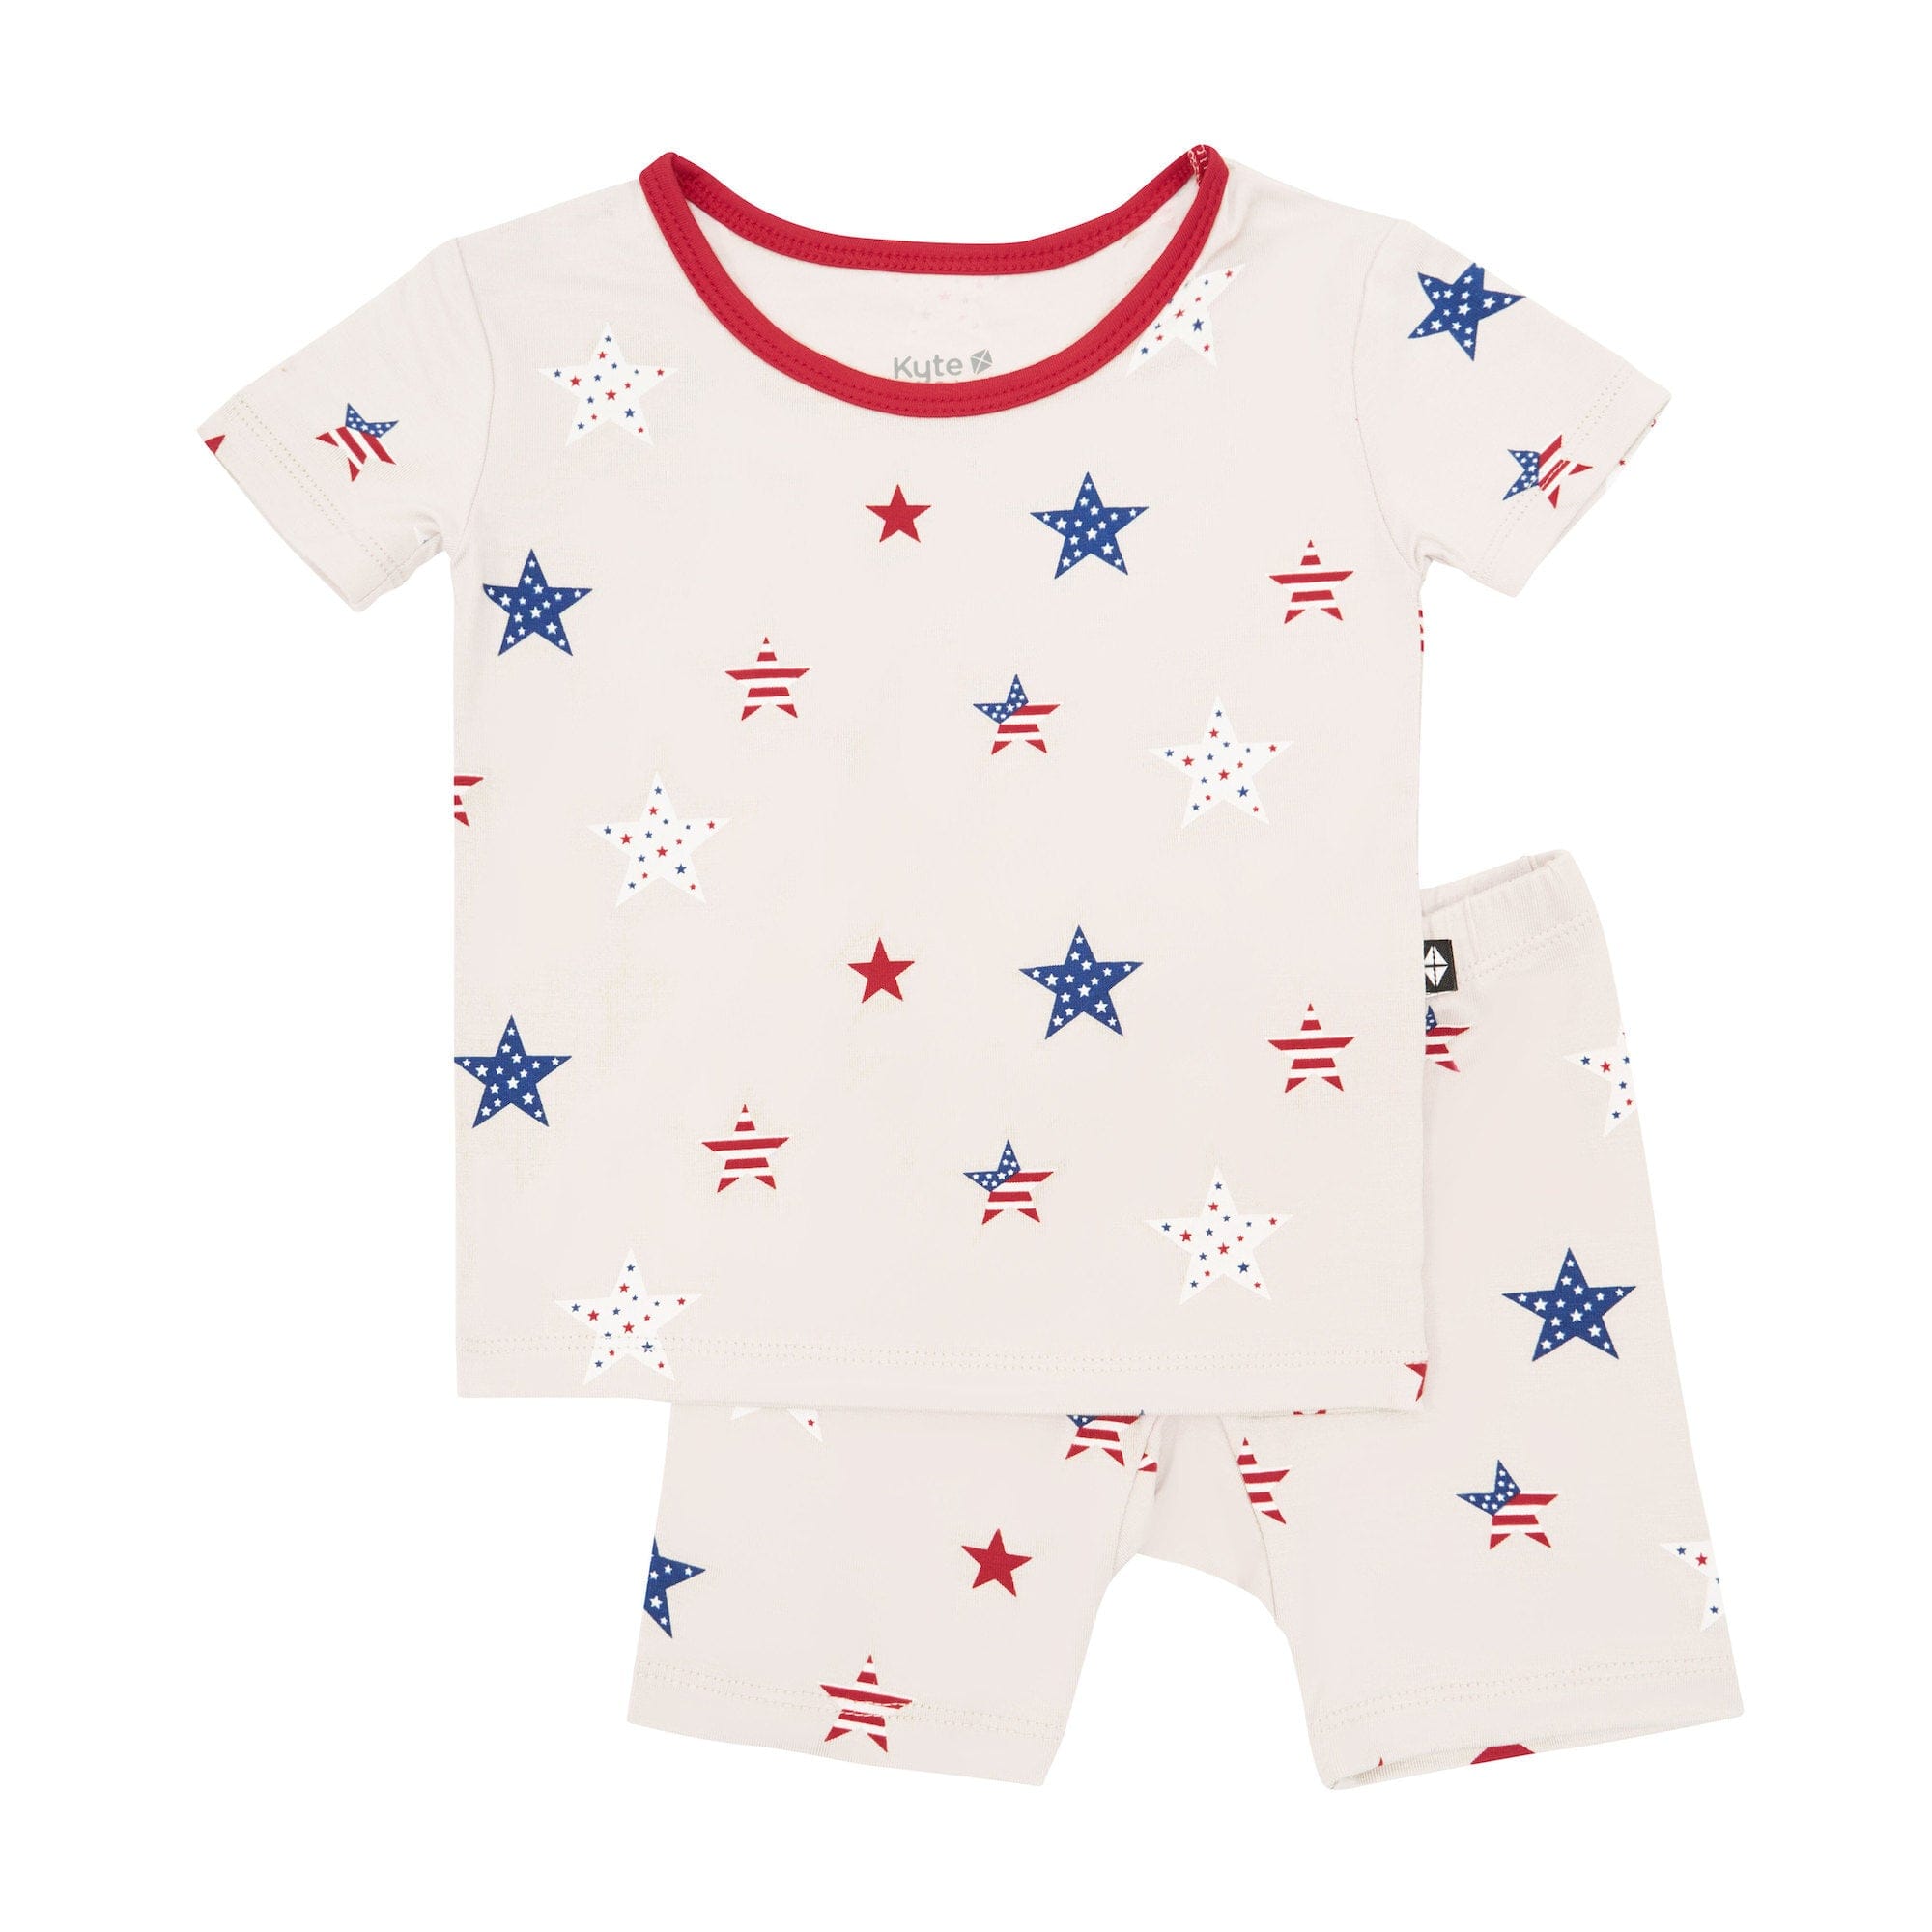 Kyte Baby Short Sleeve Toddler Pajama Set Short Sleeve Pajamas in Liberty